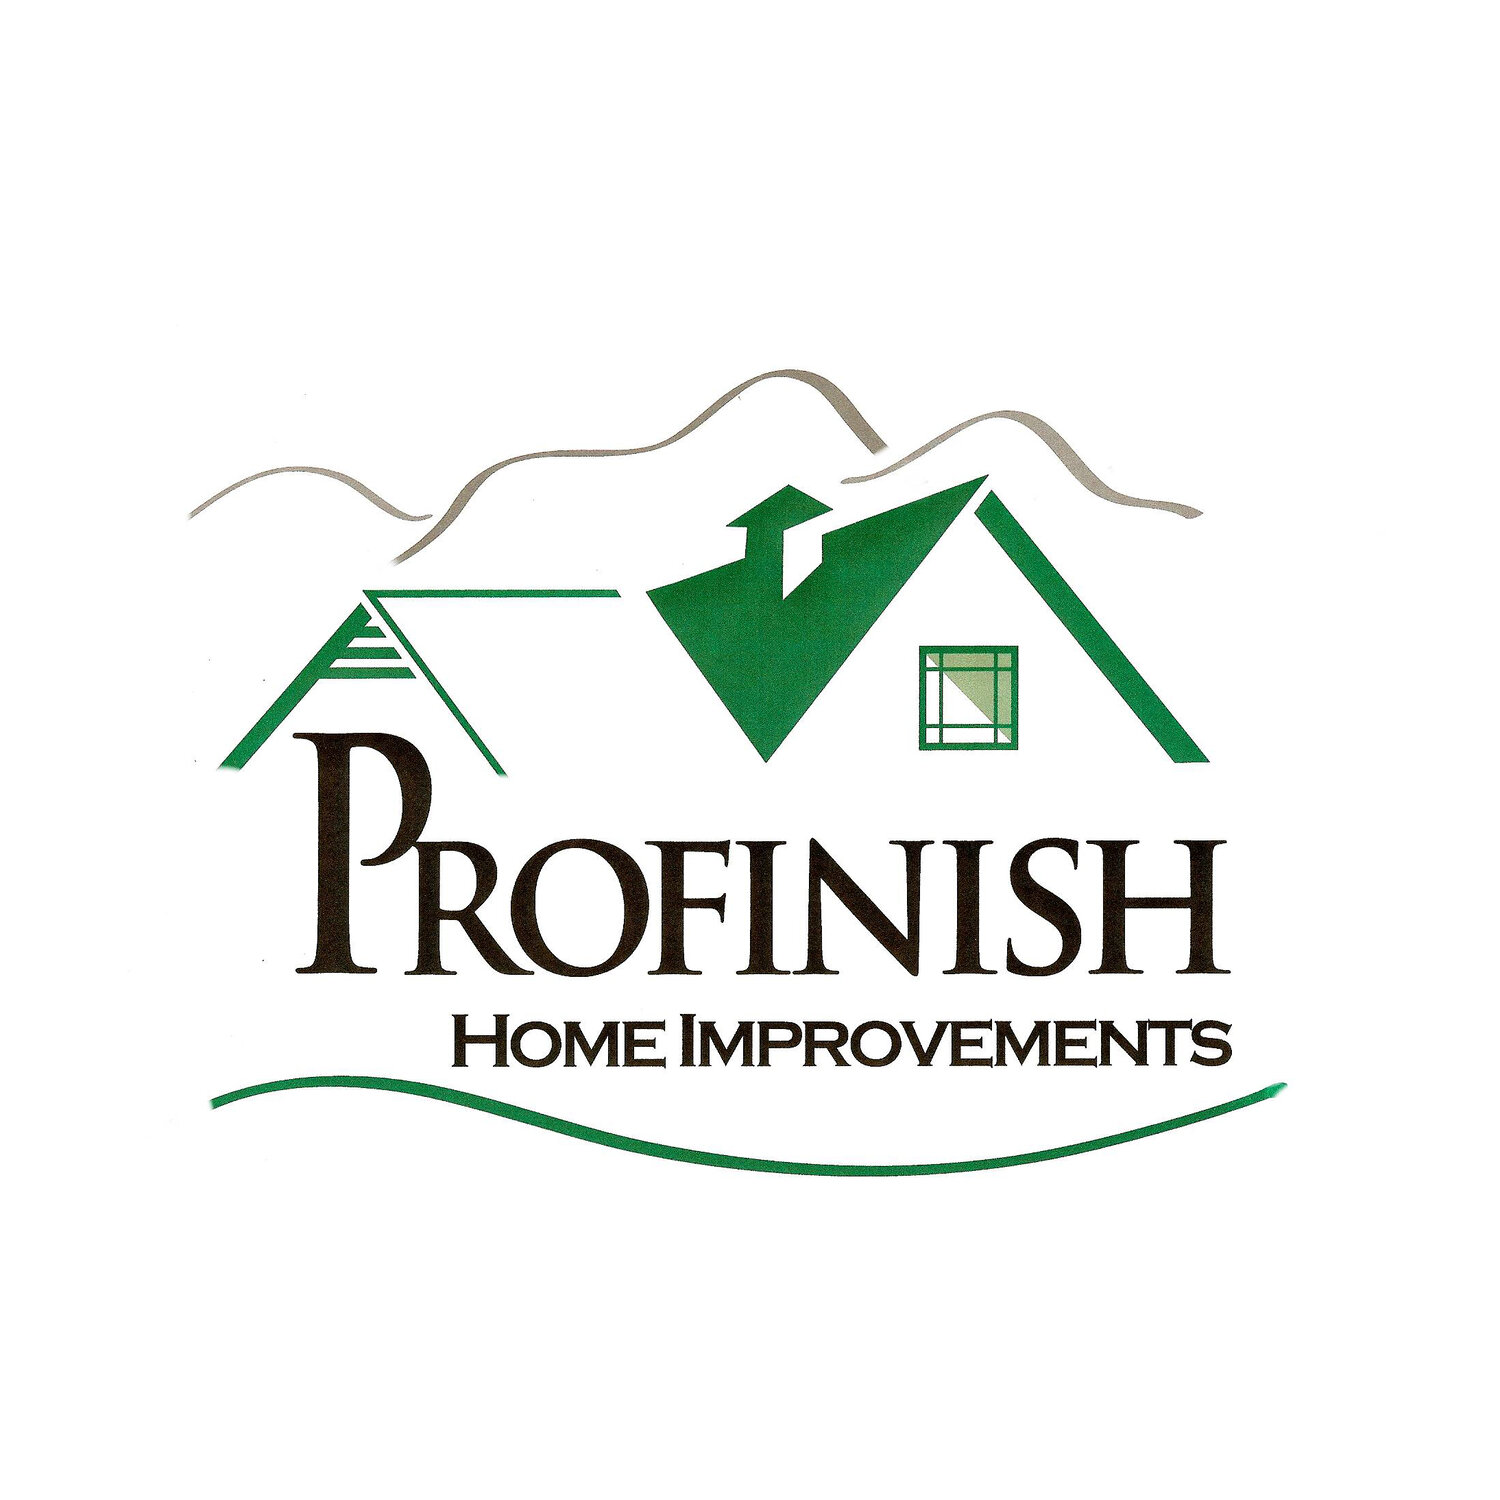 Profinish Home Improvements